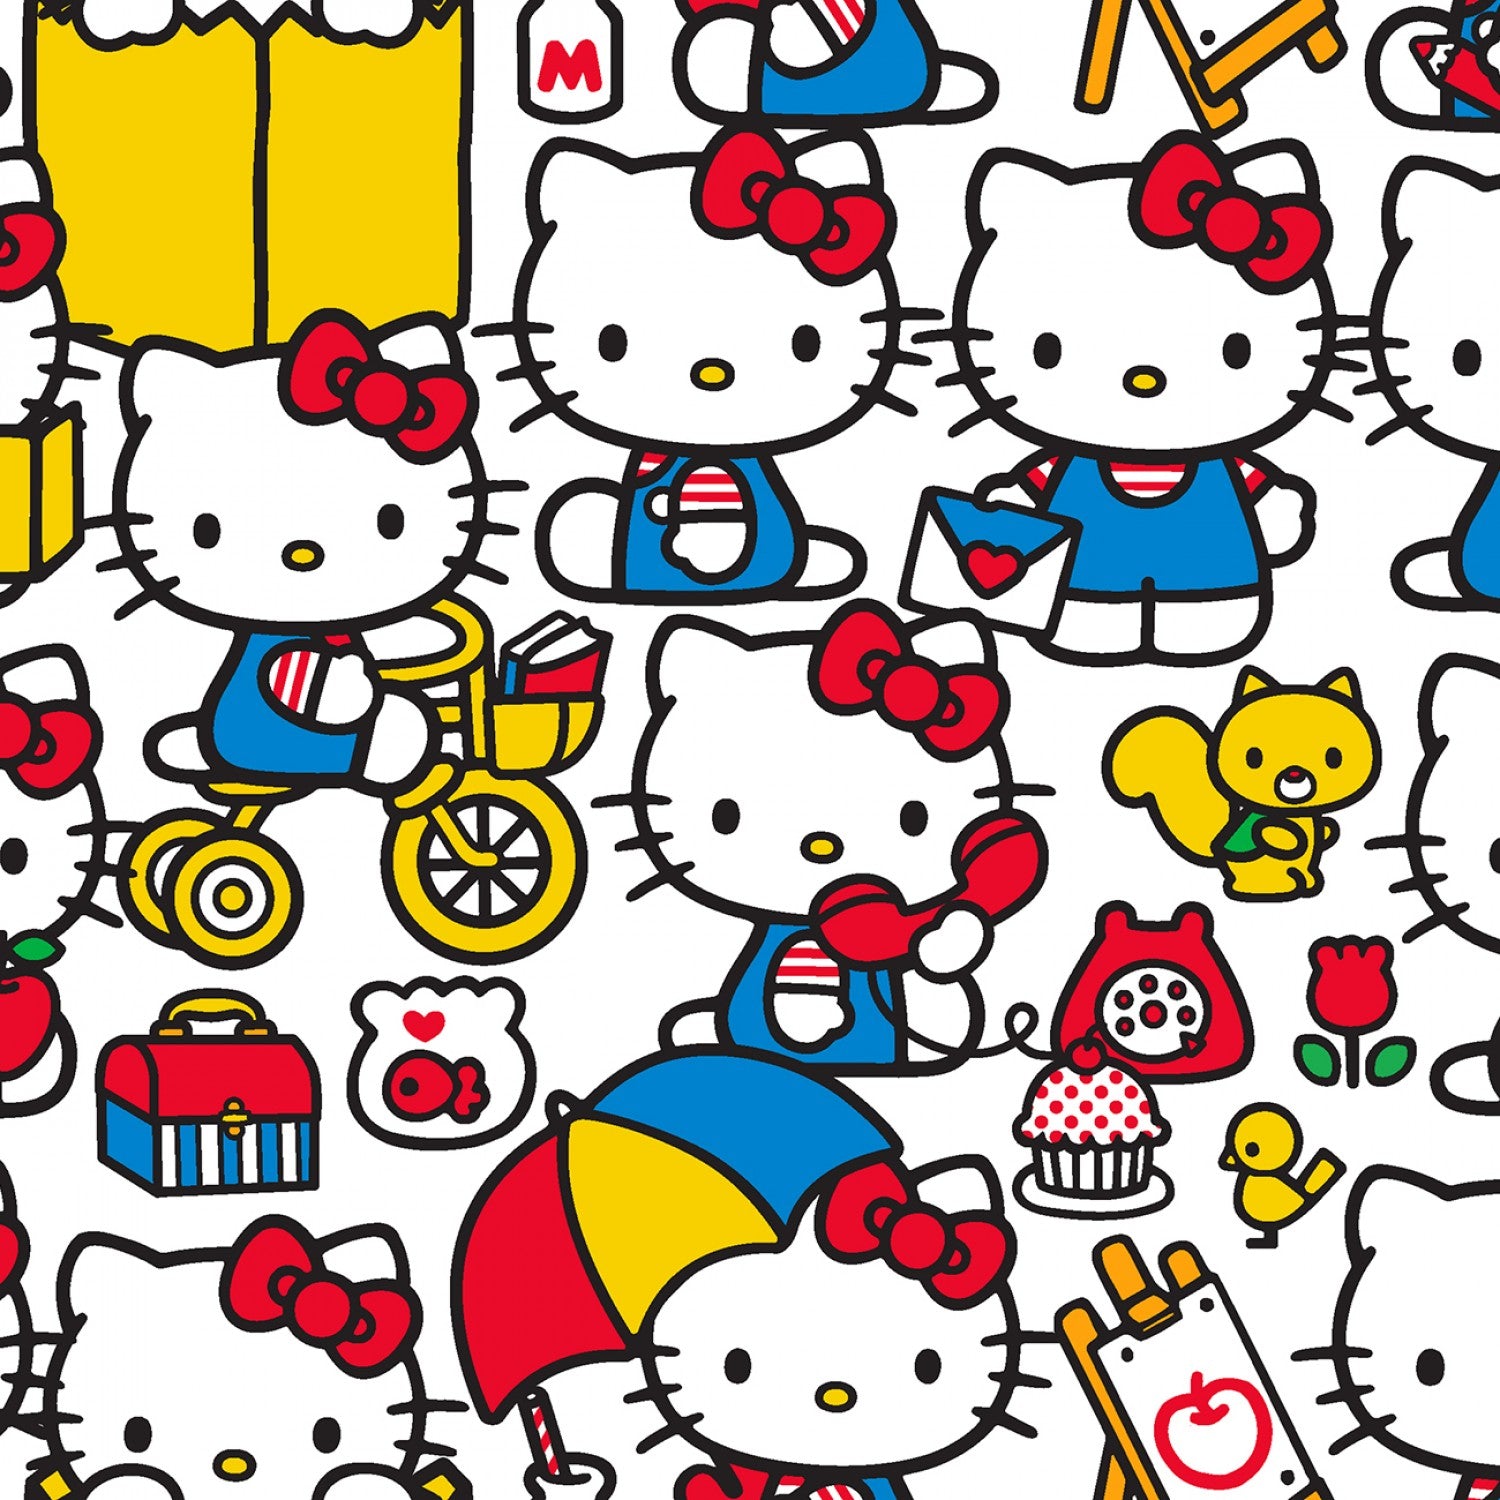 Springs Creative Hello Kitty at Play Cotton Fabric 1 Yard